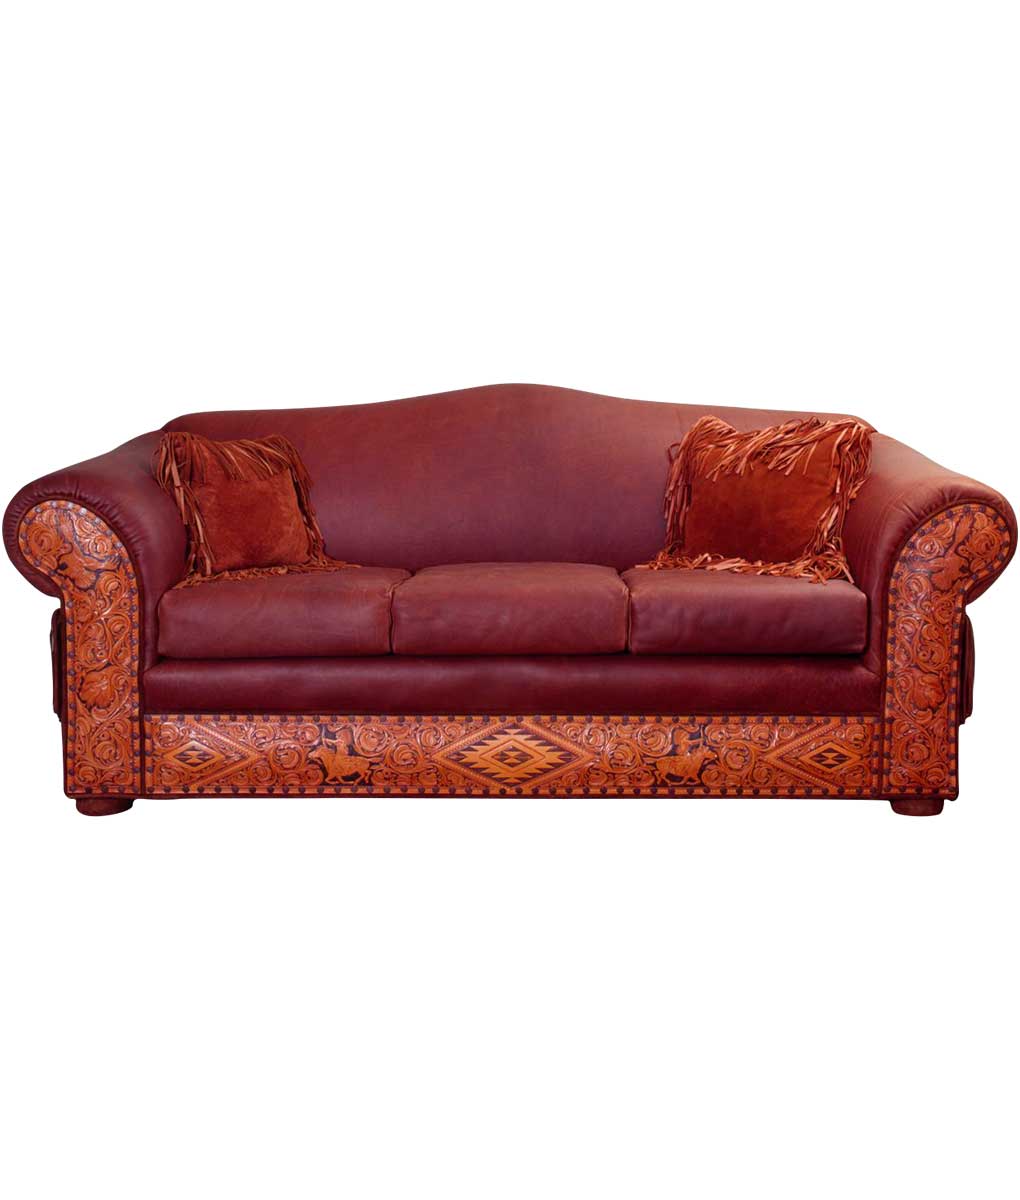 Hand Tooled Leather Sofa Elegant, Leather Western Furniture